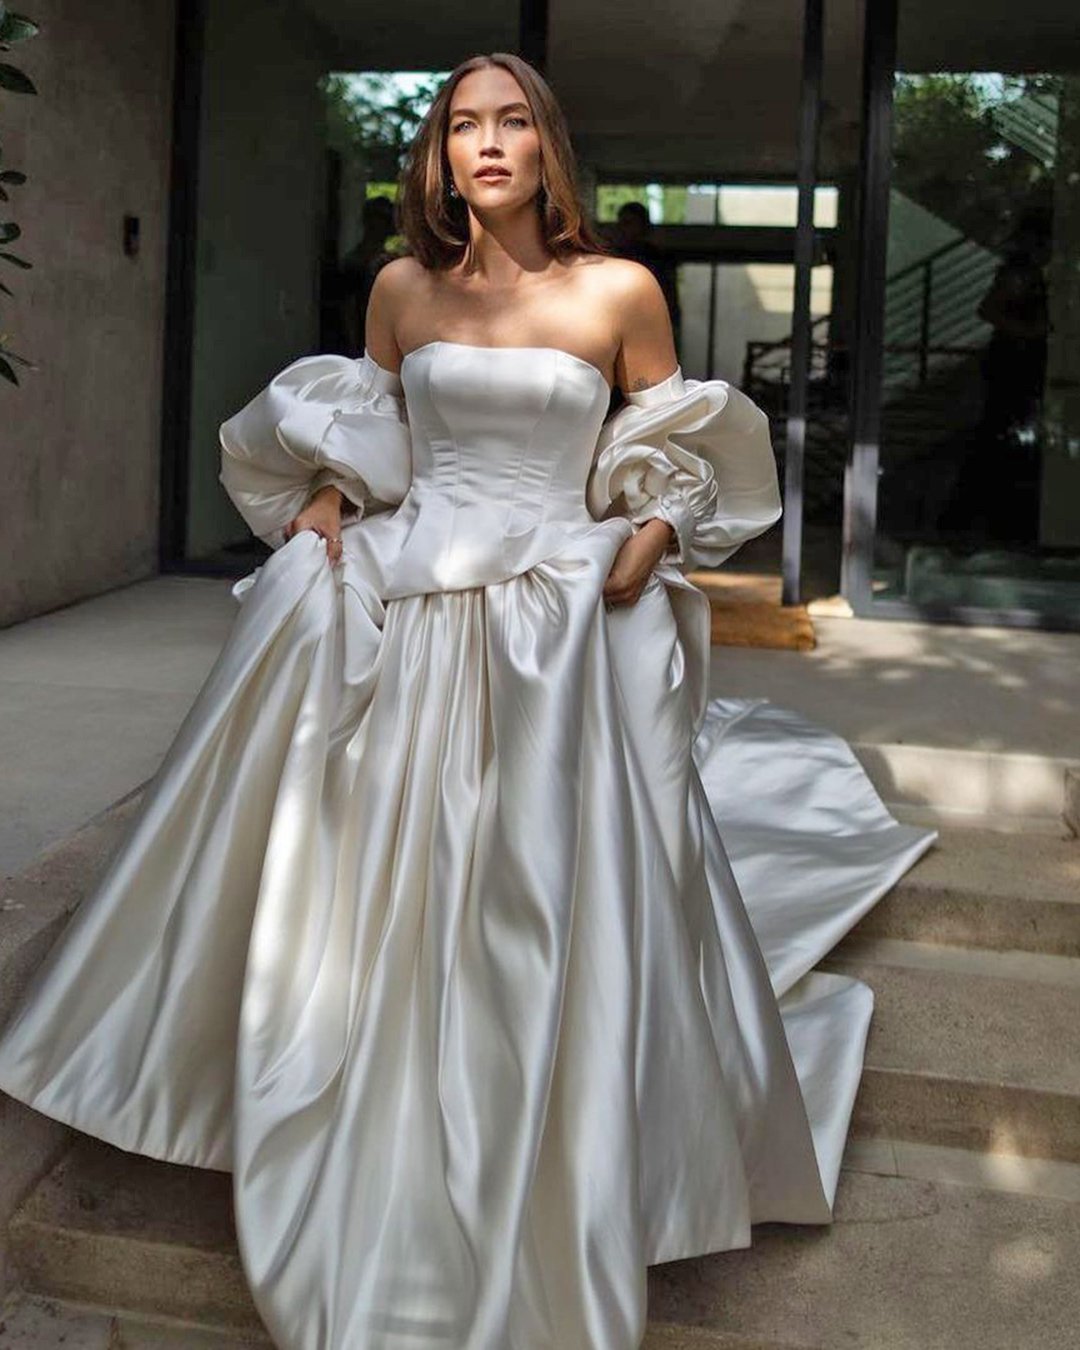 strapless wedding dresses ball gown with puff sleeves simple train galialahav